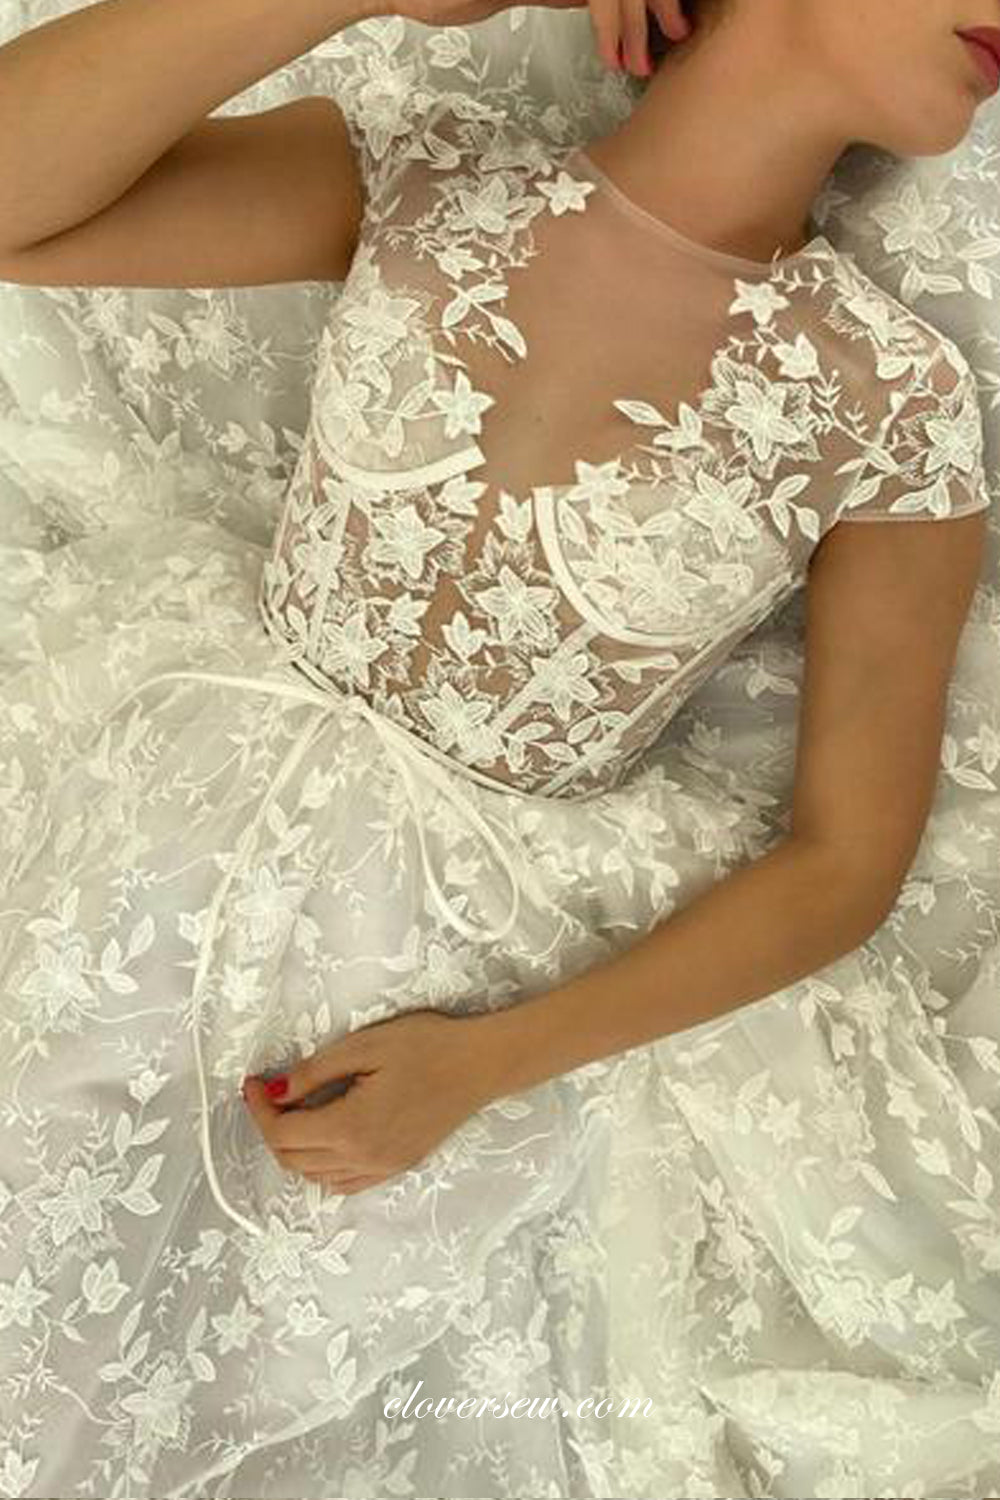 Gorgeous Lace Short Sleeve Illusion Top A-line Wedding Dresses CW0268